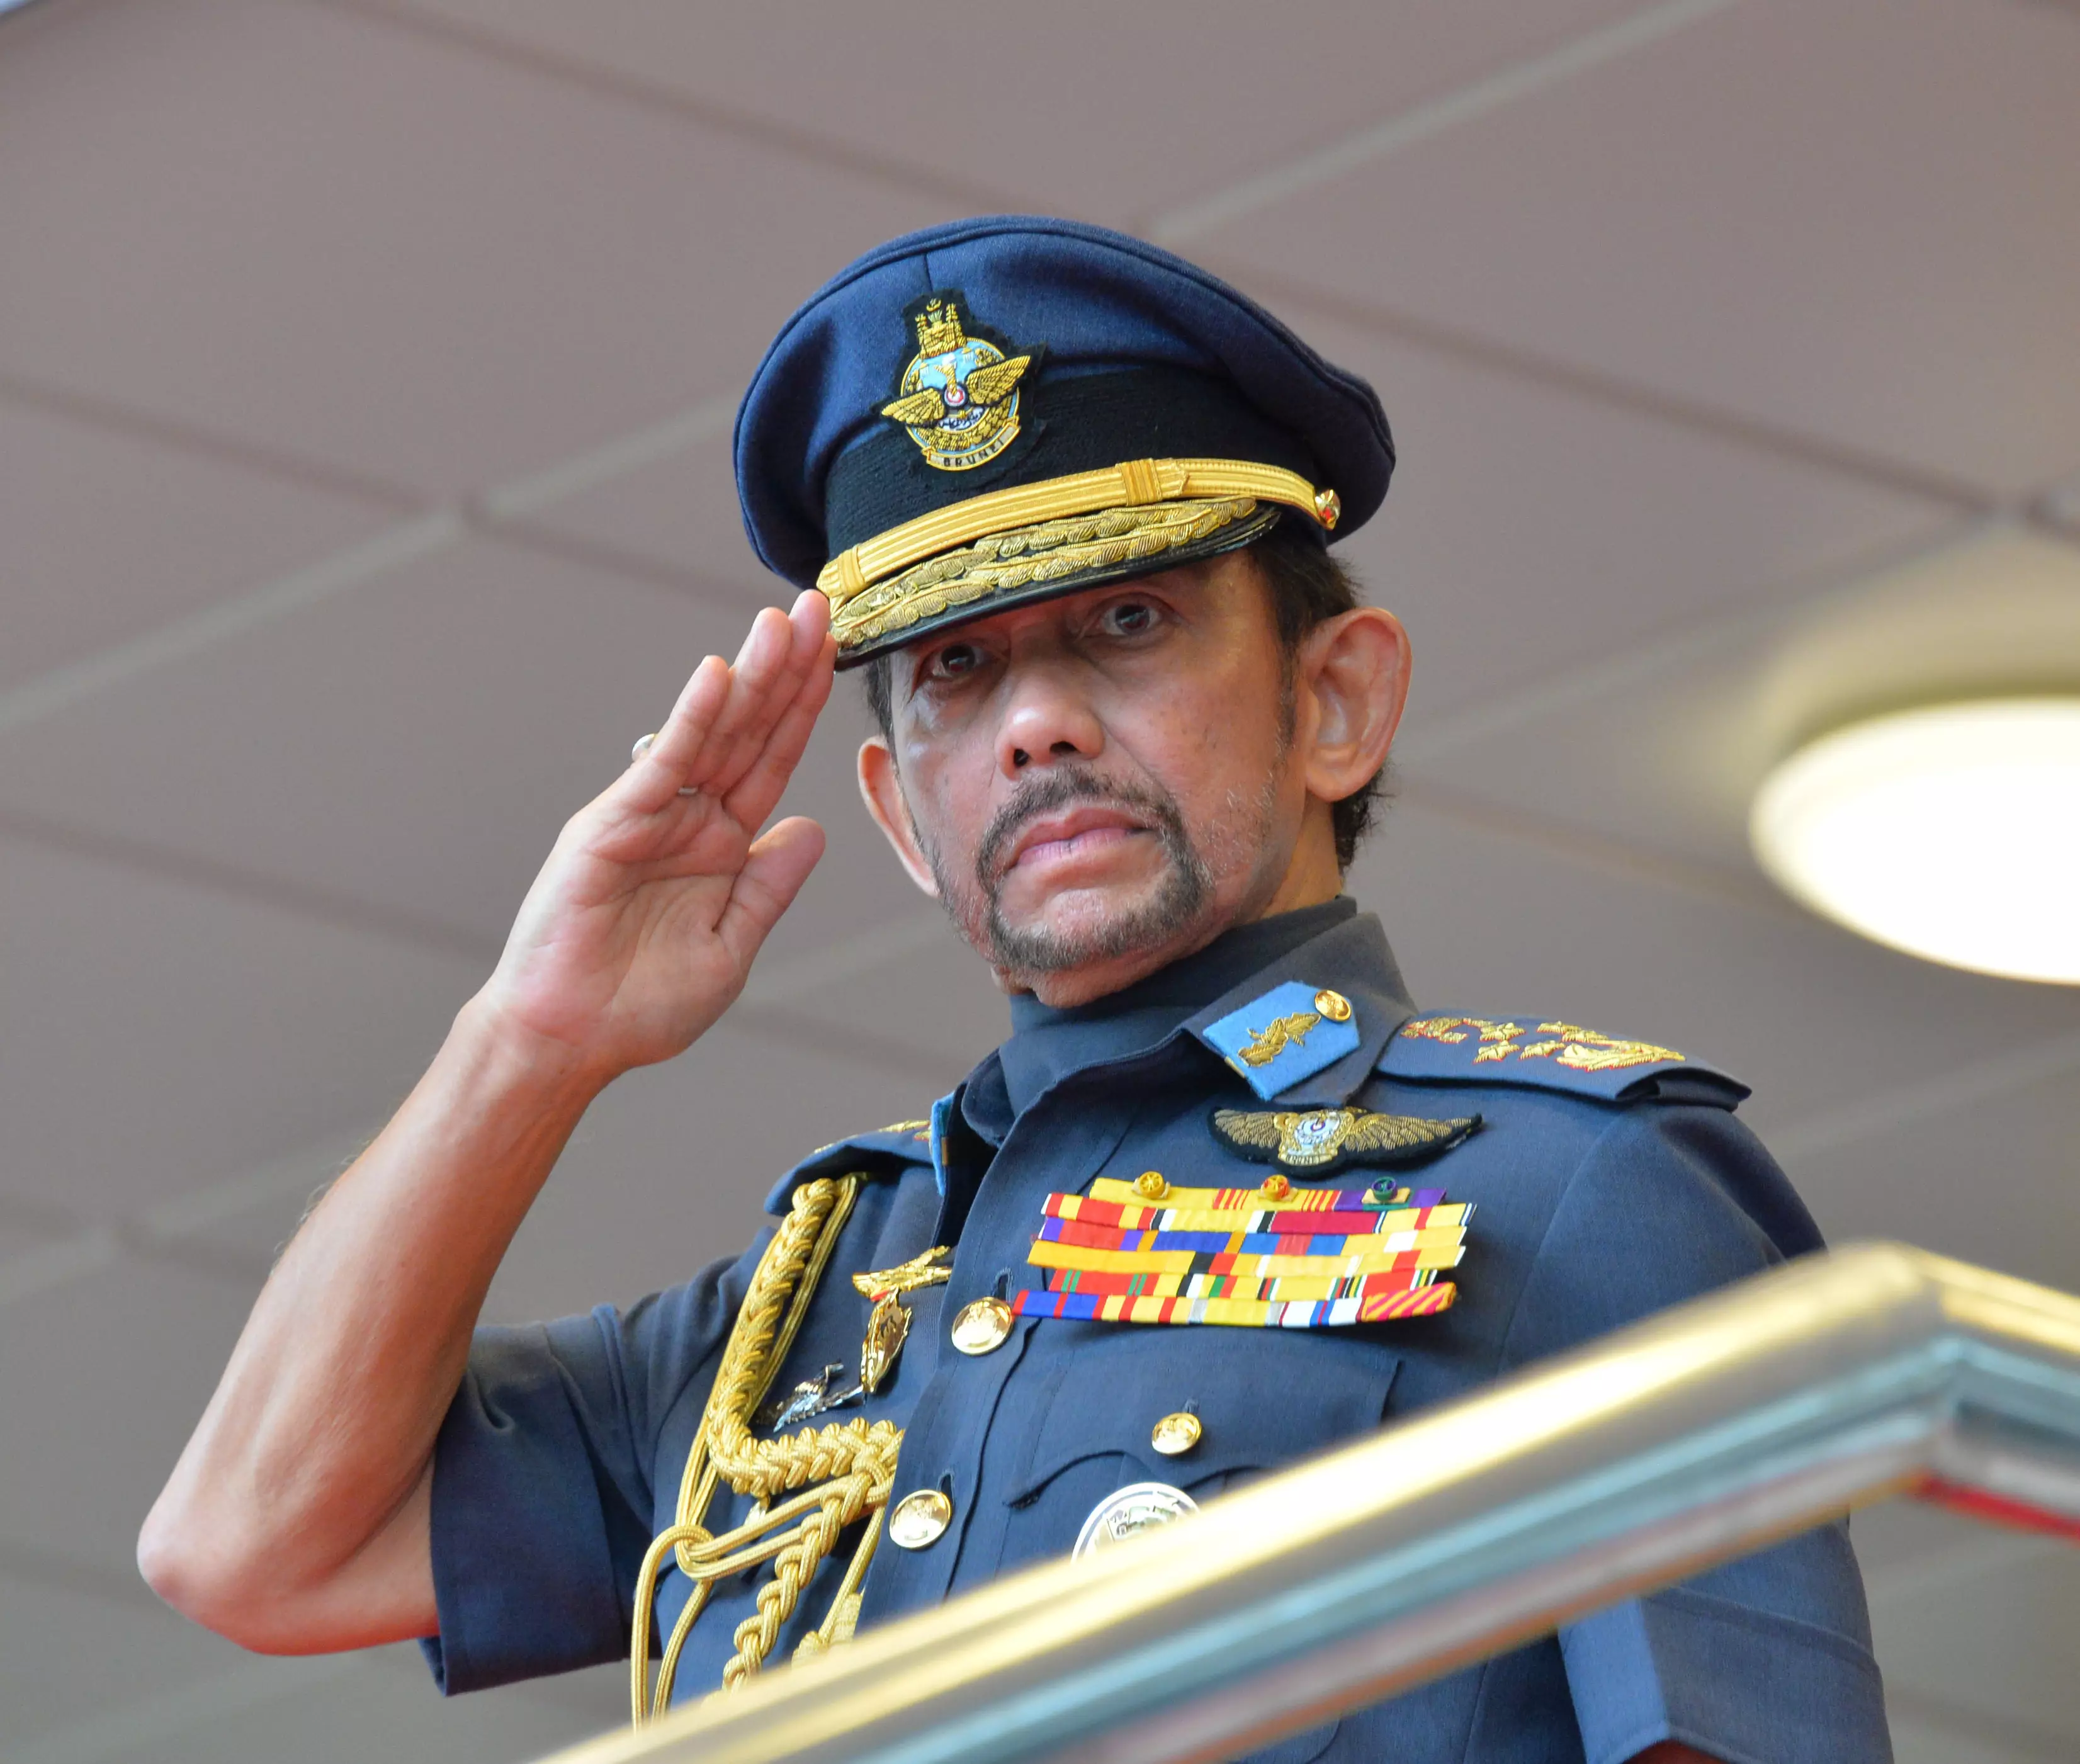 Sultan Haji Hassanal Bolkiah is the current Prime Minister of Brunei.